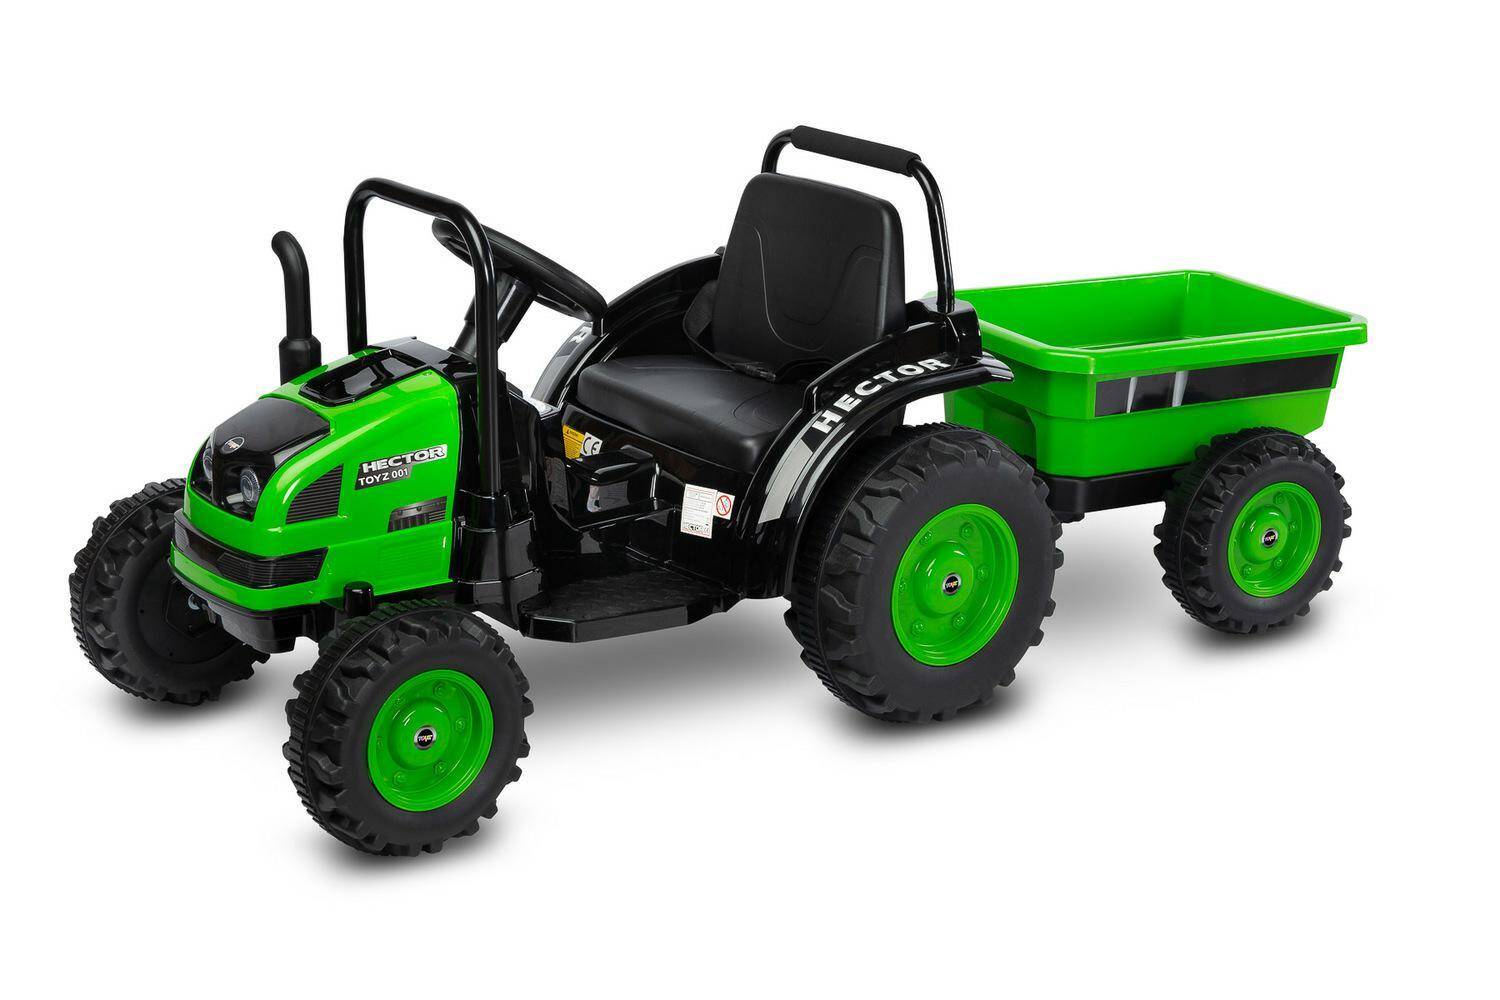 TOYZ traktor Hector green pojazd na